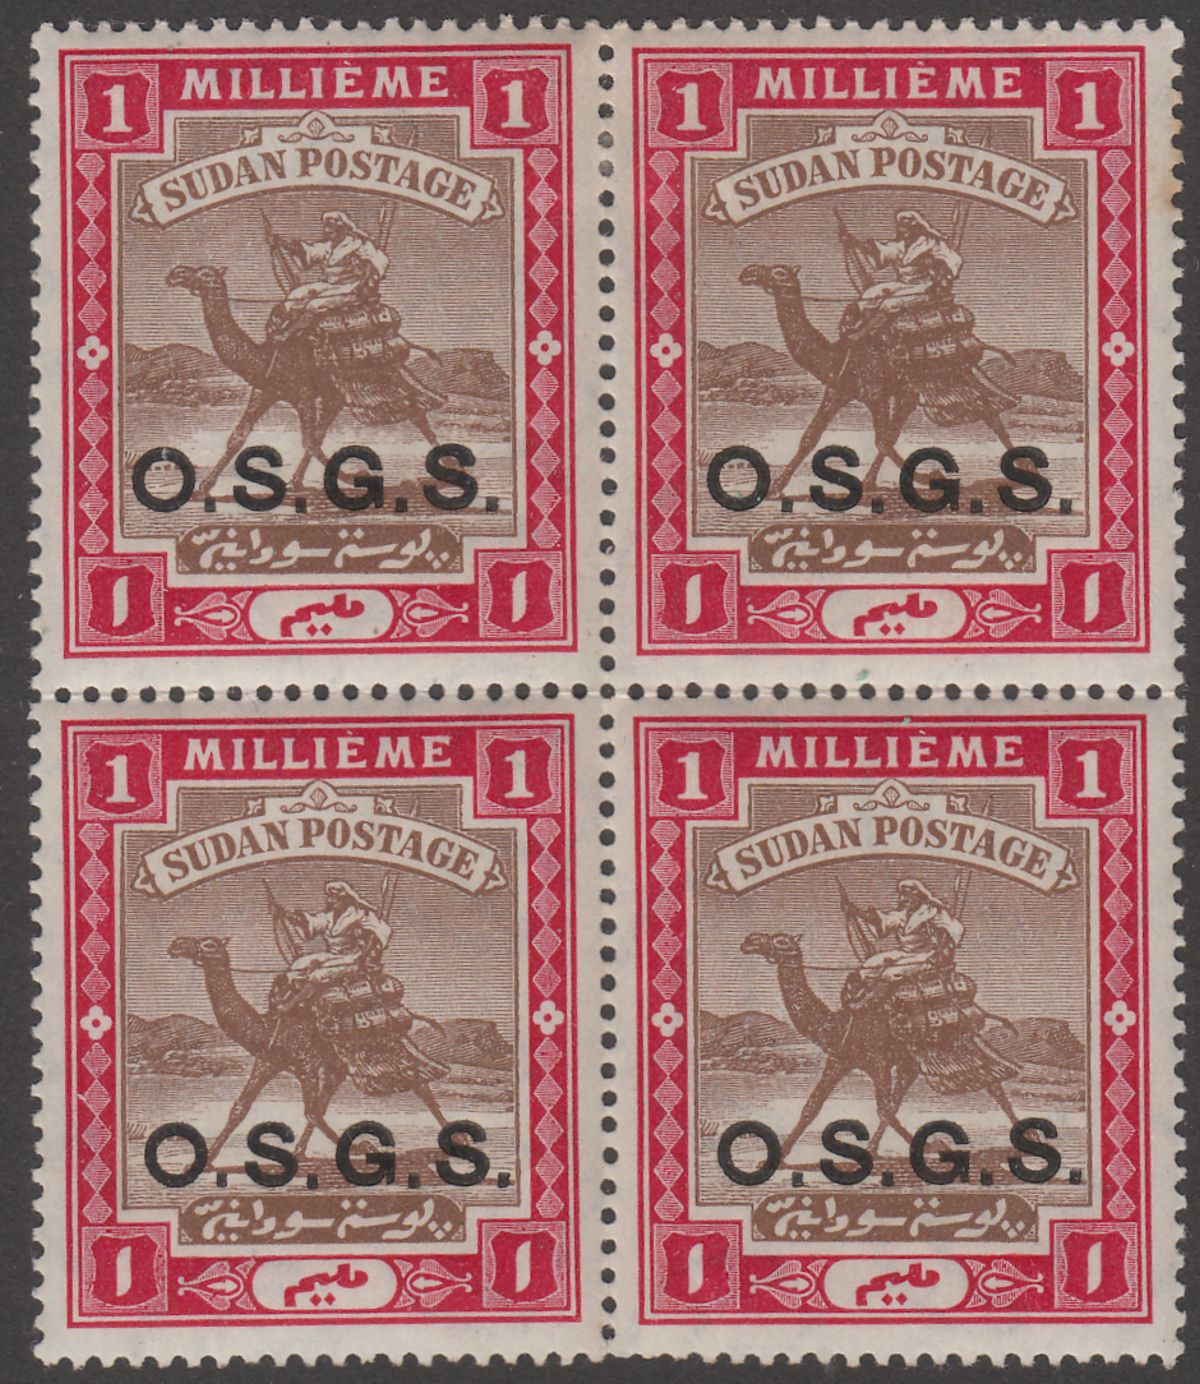 Sudan 1904 KEVII Official Camel Postman 1m Overprint Block of 4 Mint SG O5